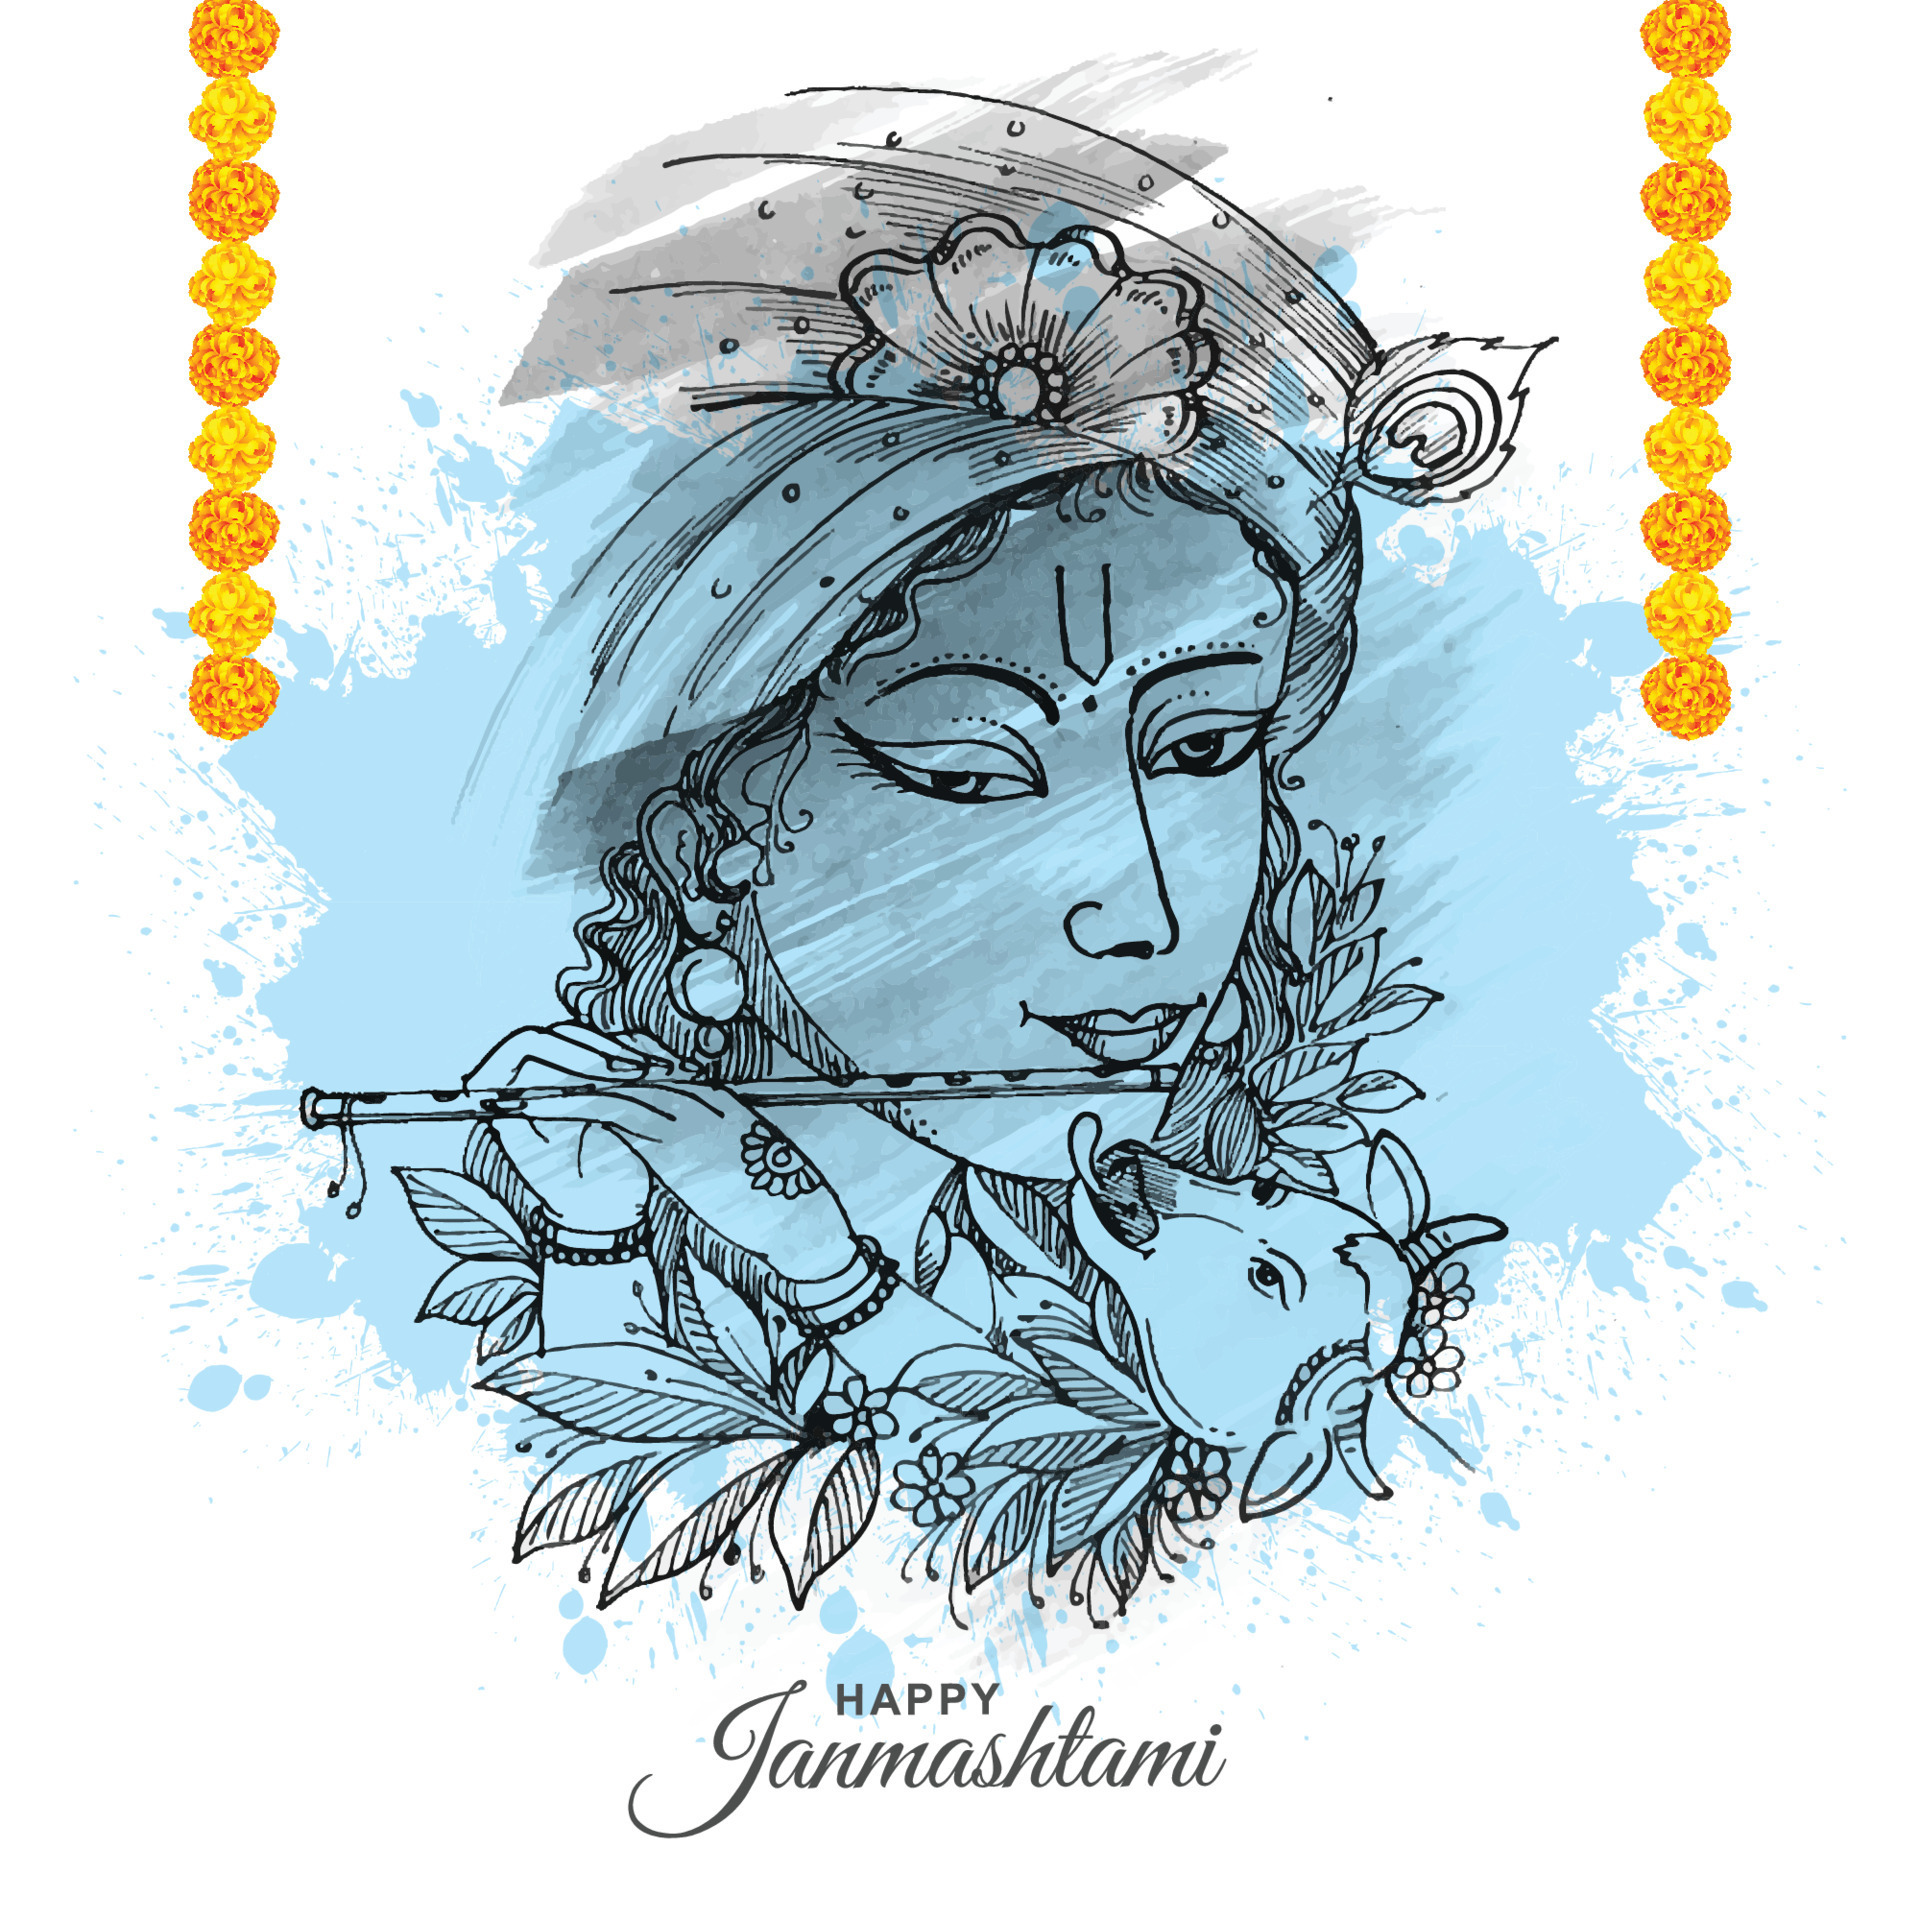 Image Details IST_22739_00560 - Janmashtami. Concept of a religious  holiday. Indian fest. Dahi handi on Janmashtami, celebrating birth of  Krishna. Text in Hindi - Janmashtami. Peacock feather. Janmashtami. Indian  fest. Dahi handi